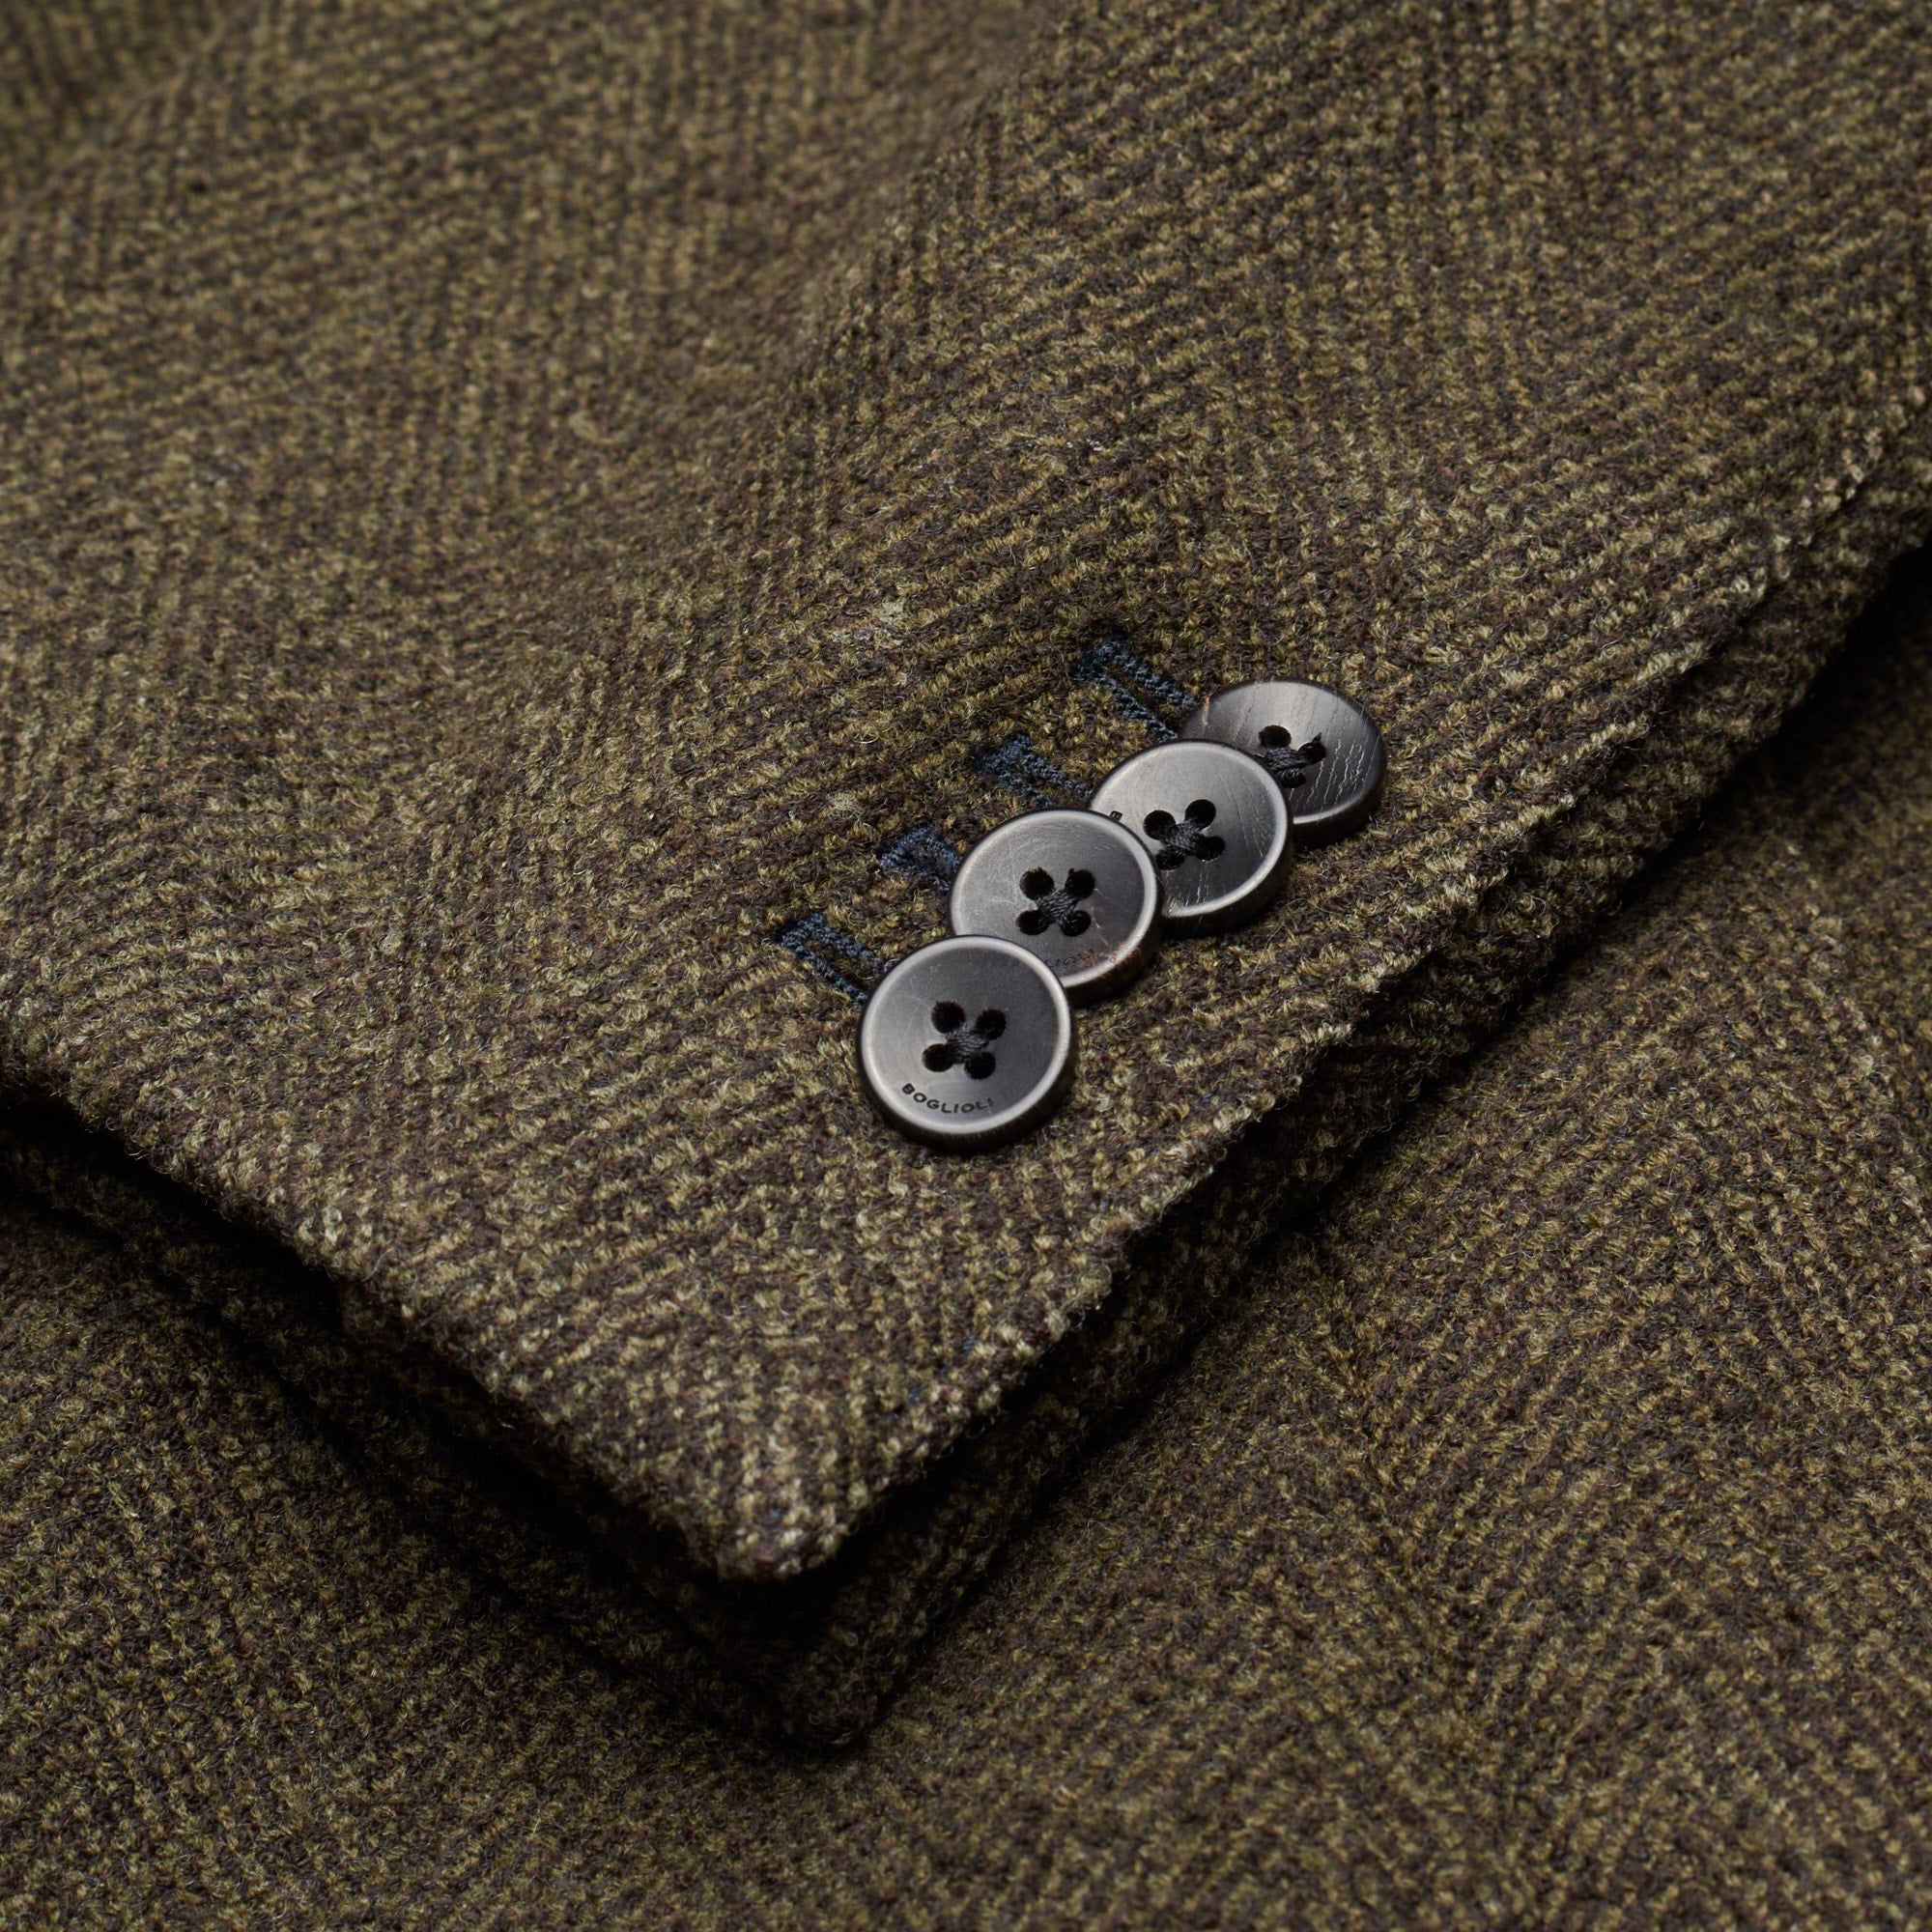 BOGLIOLI Milano Green Herringbone Wool Blend Unlined Coat EU 50 NEW US 40